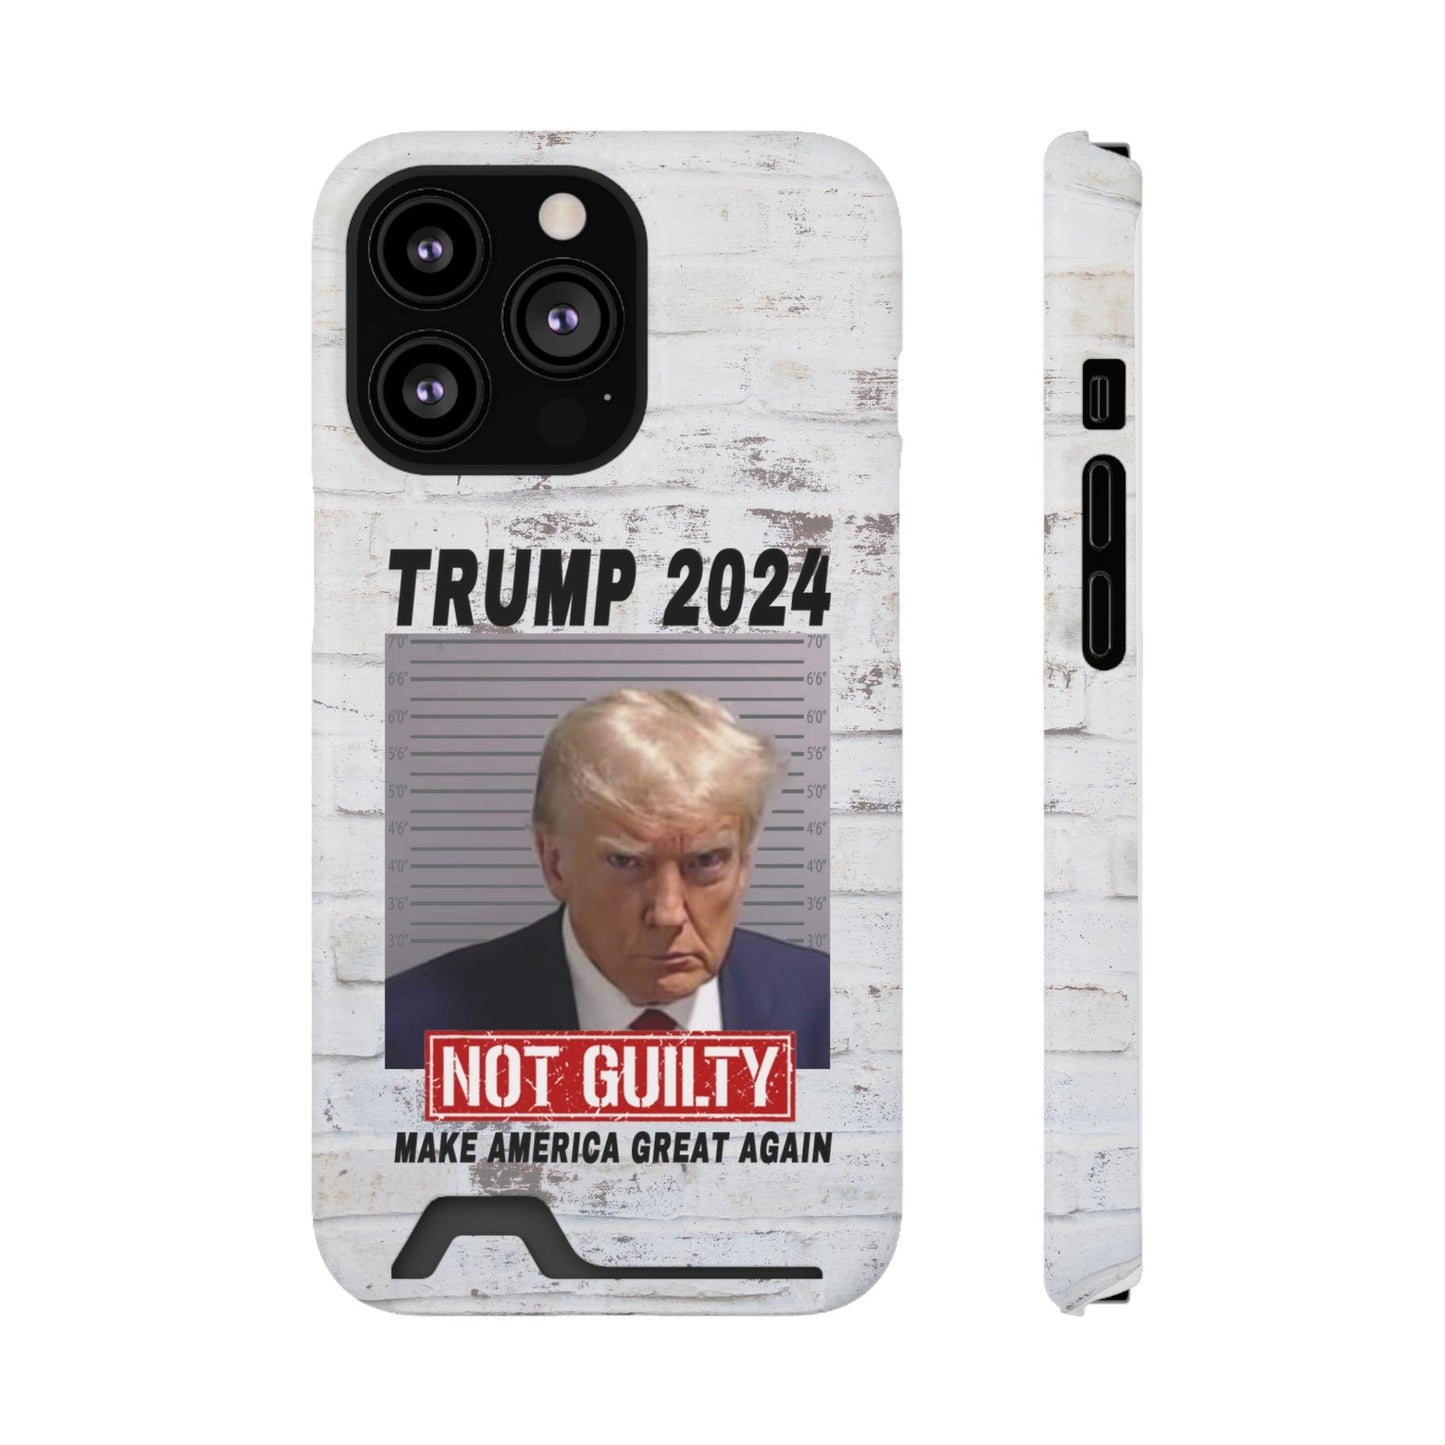 Trump Mugshot iPhone and Samsung models phone case, Trump 2024, Donald Trump not Guilty phone case, Custom phone case - Canadohta Custom Creations LLC